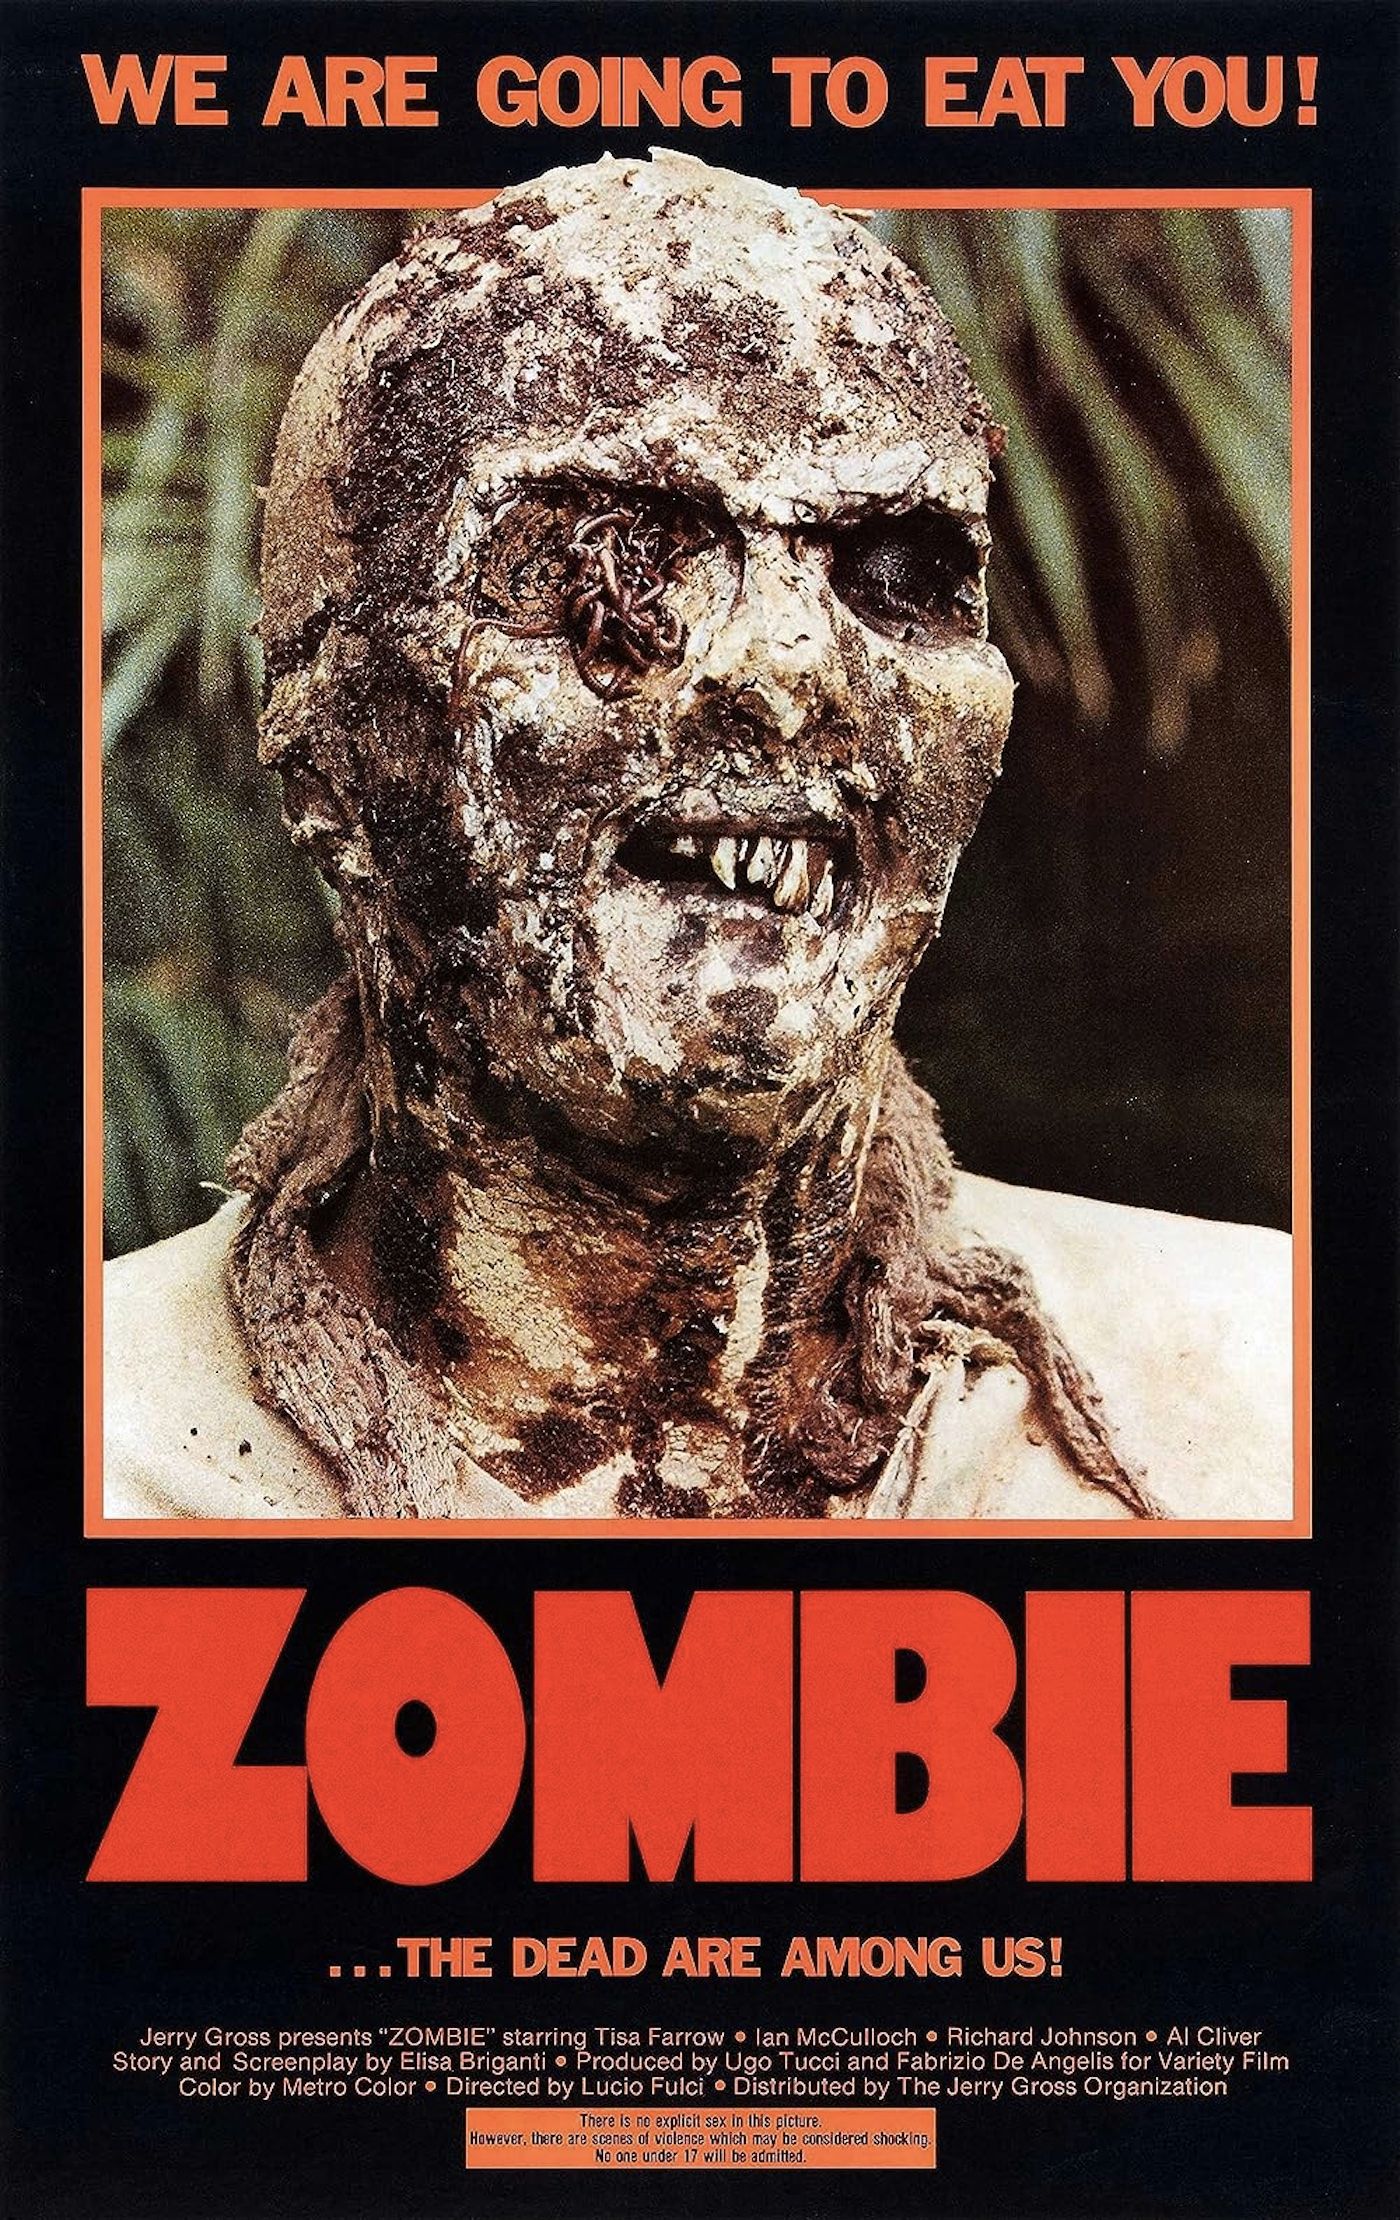 Zombie (1979) poster